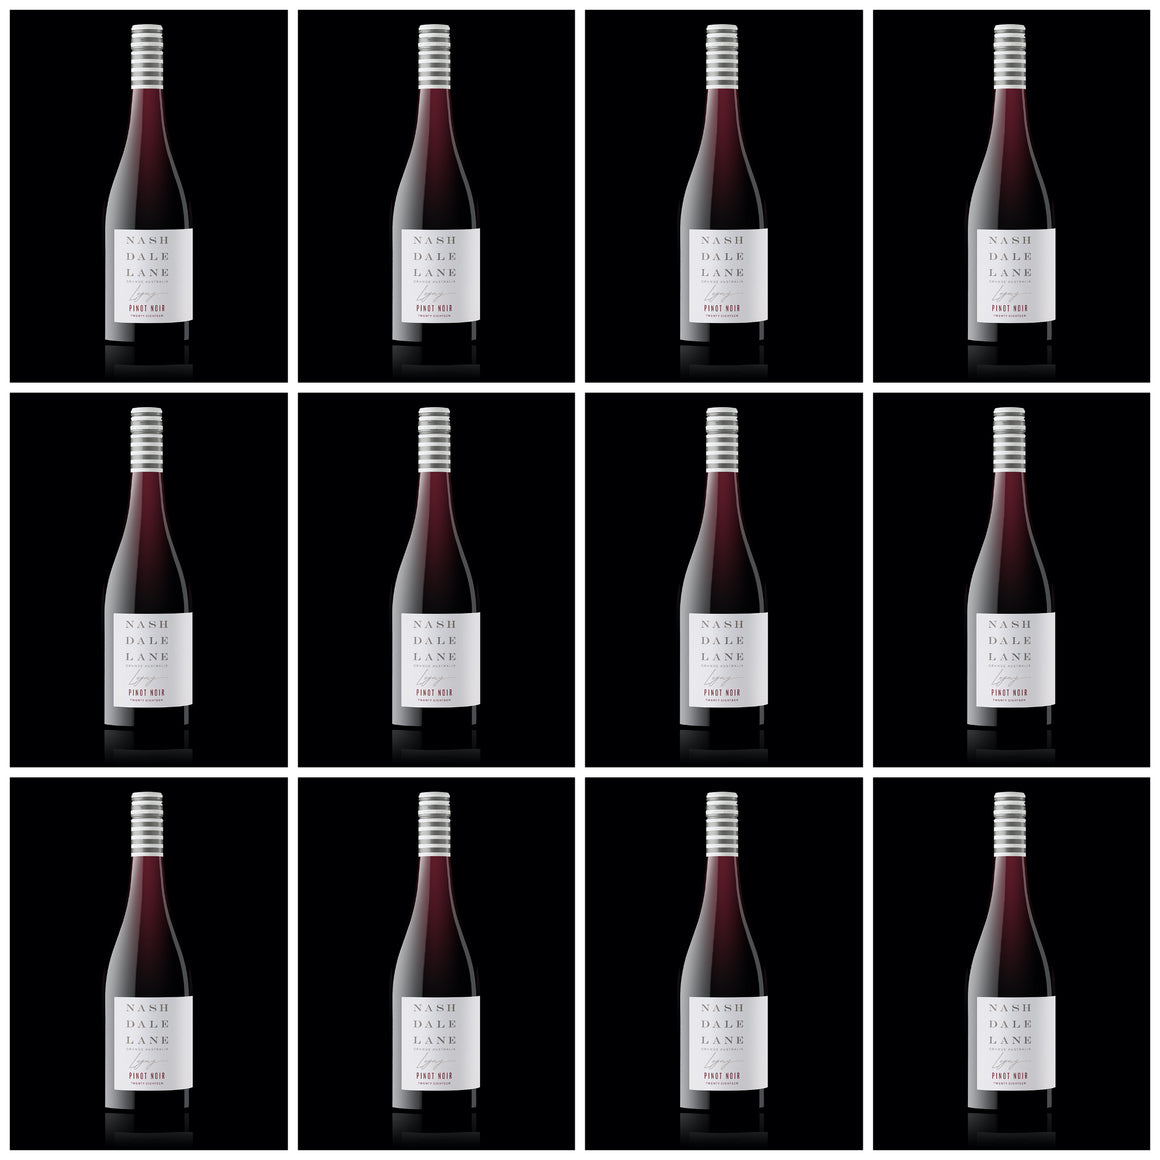 2019 Legacy Pinot Noir 12 bottle case